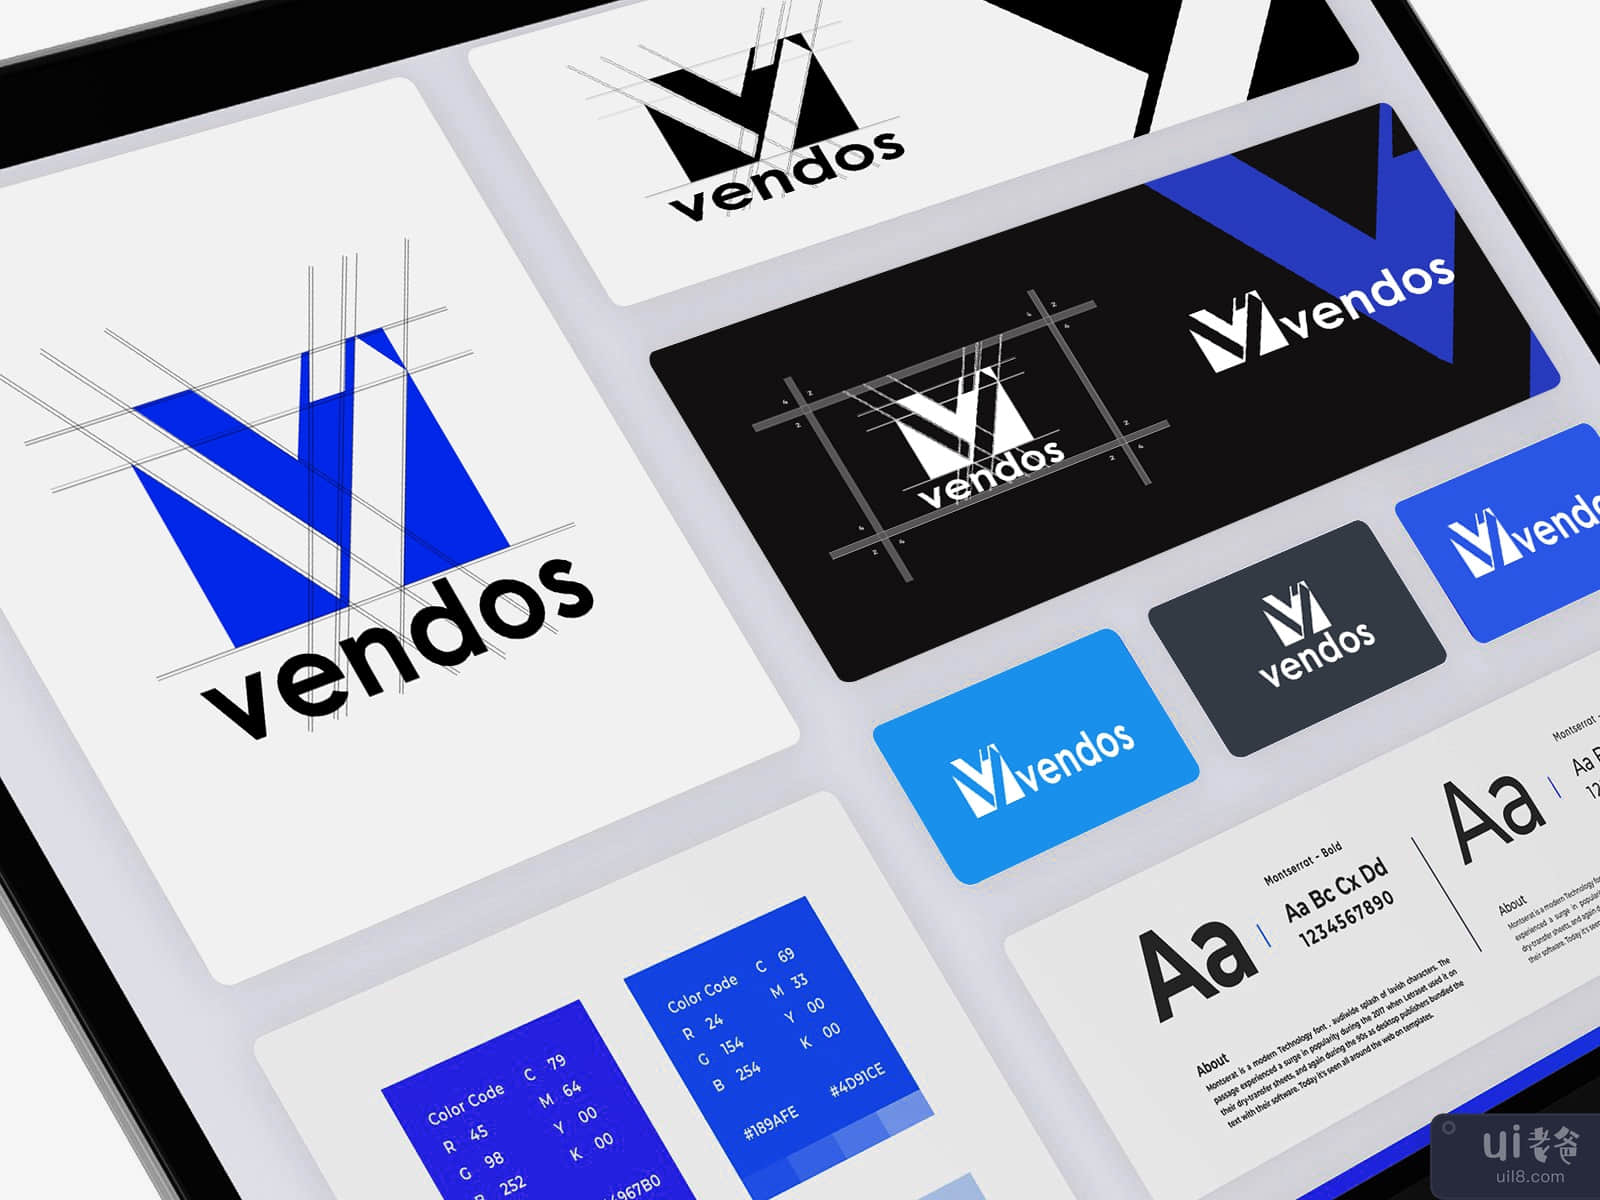 Brand identity and logo - "Vendos"